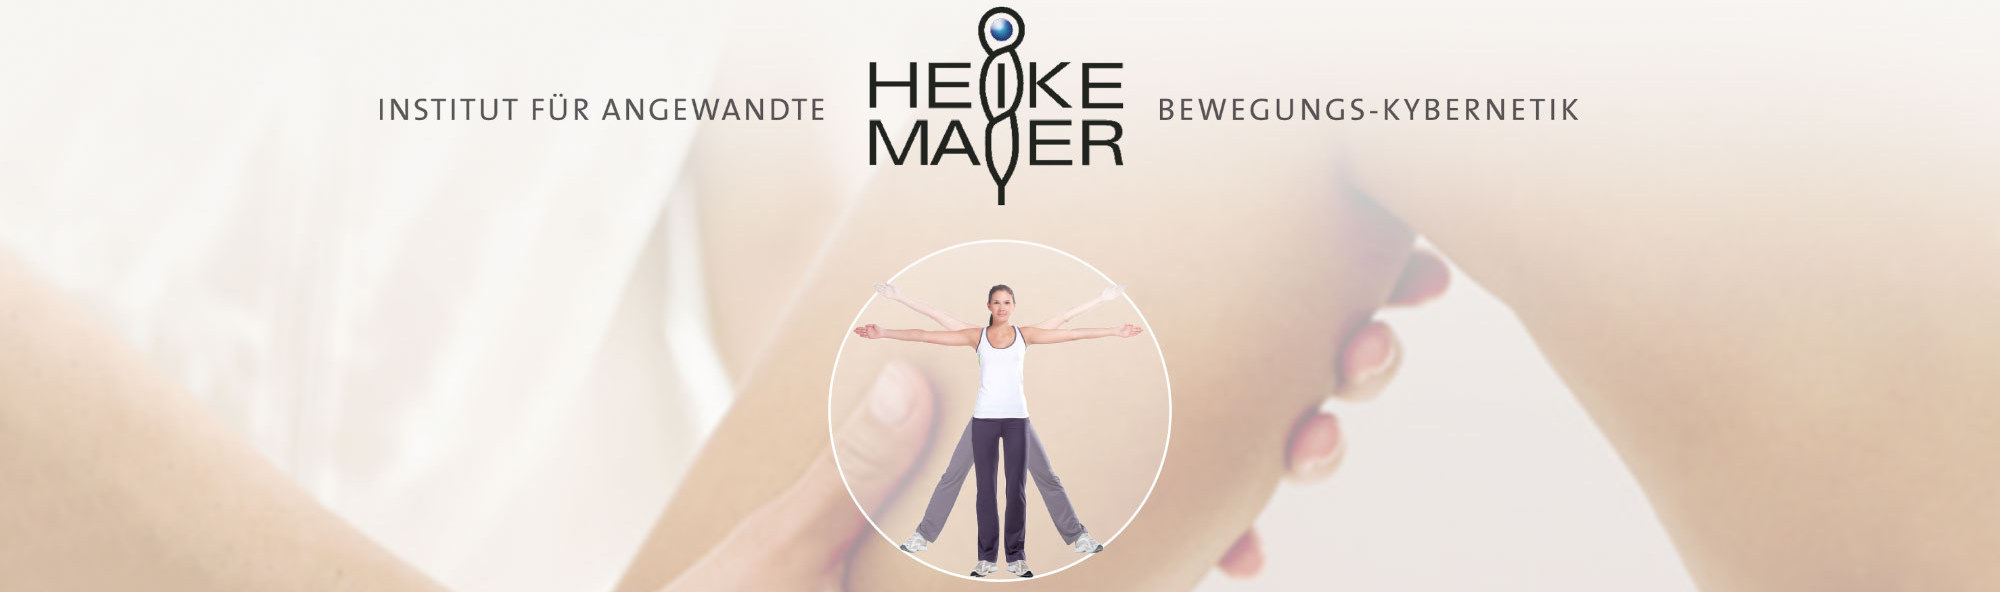 Heike Mayer logo1